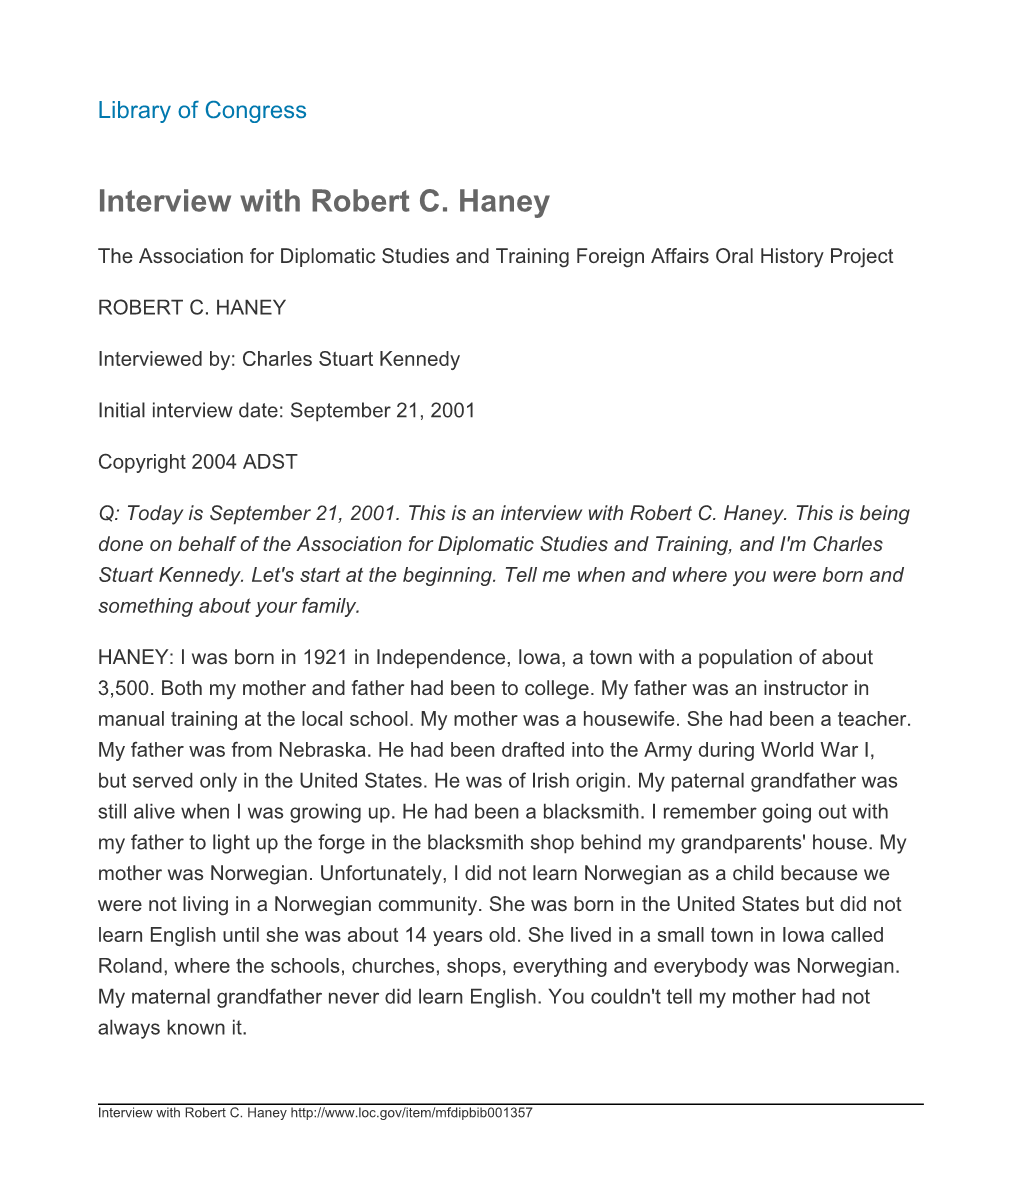 Interview with Robert C. Haney